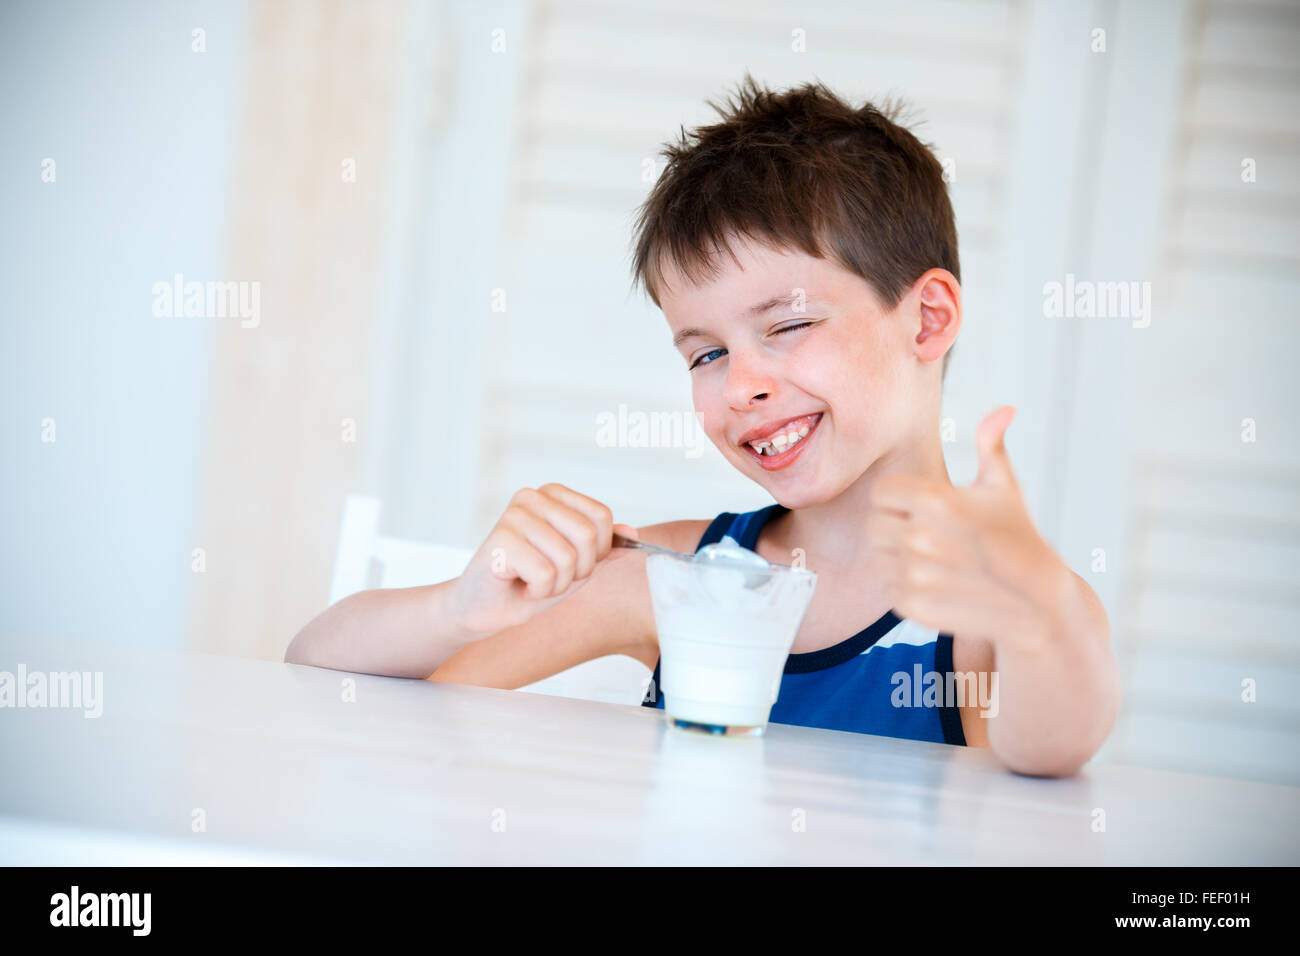 Smiling little boy eating délicieux yogourt Banque D'Images